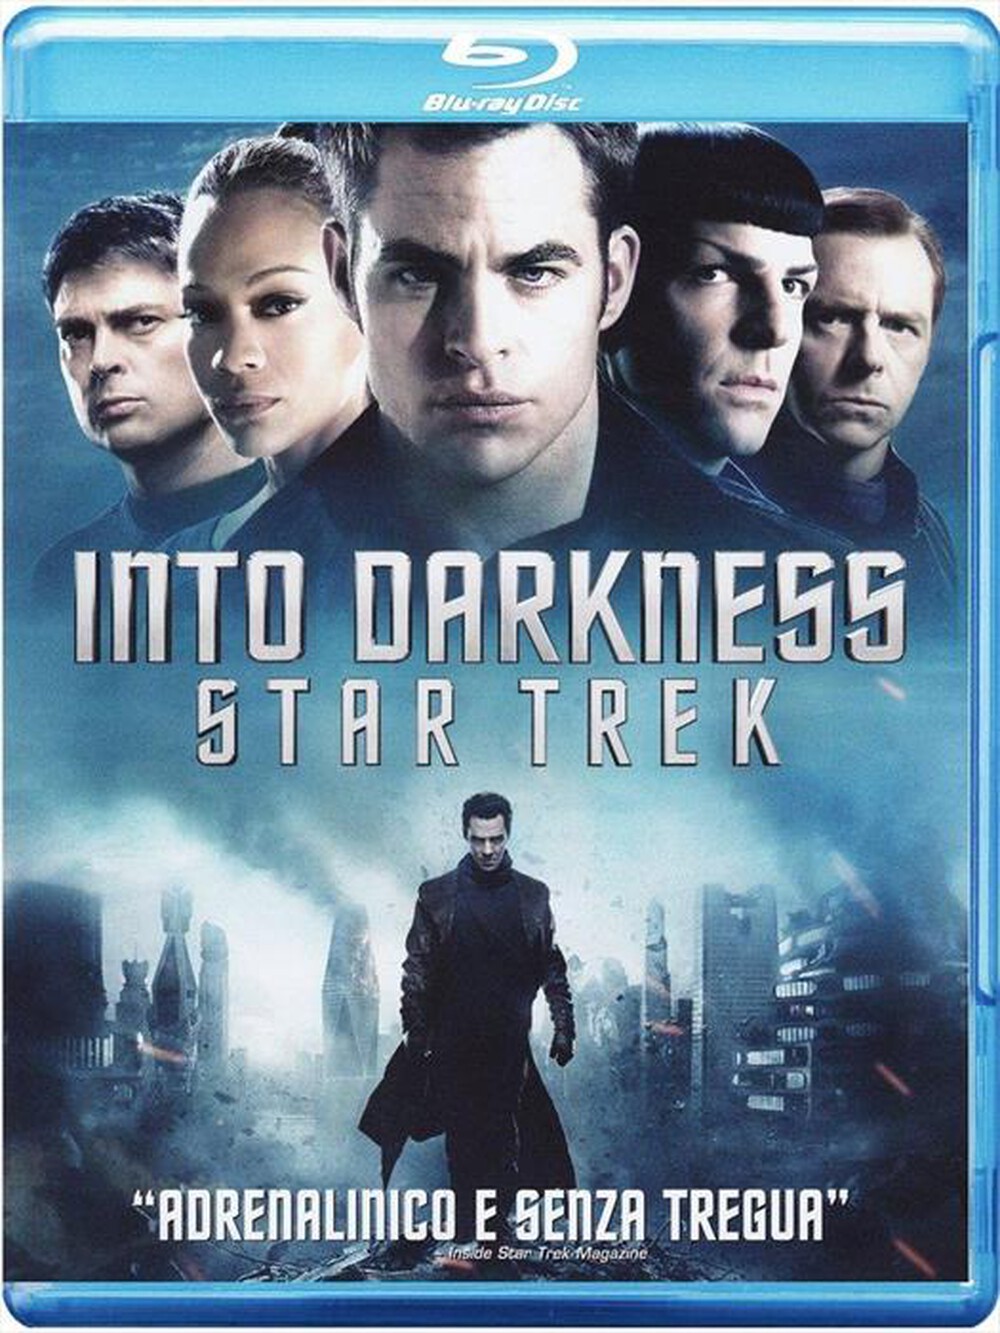 "UNIVERSAL PICTURES - Star Trek Into Darkness - "